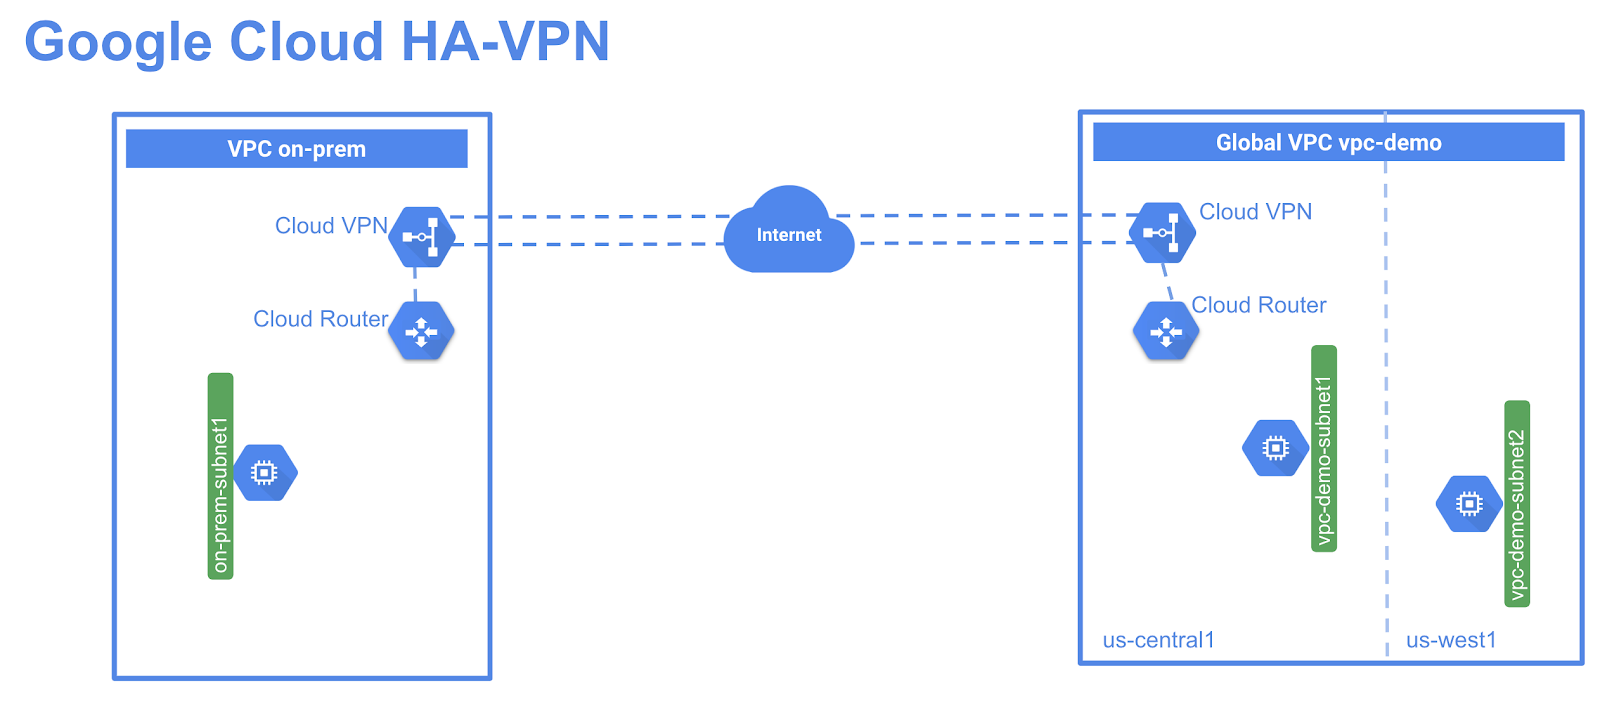 The Google Cloud HA-VPN architecture.